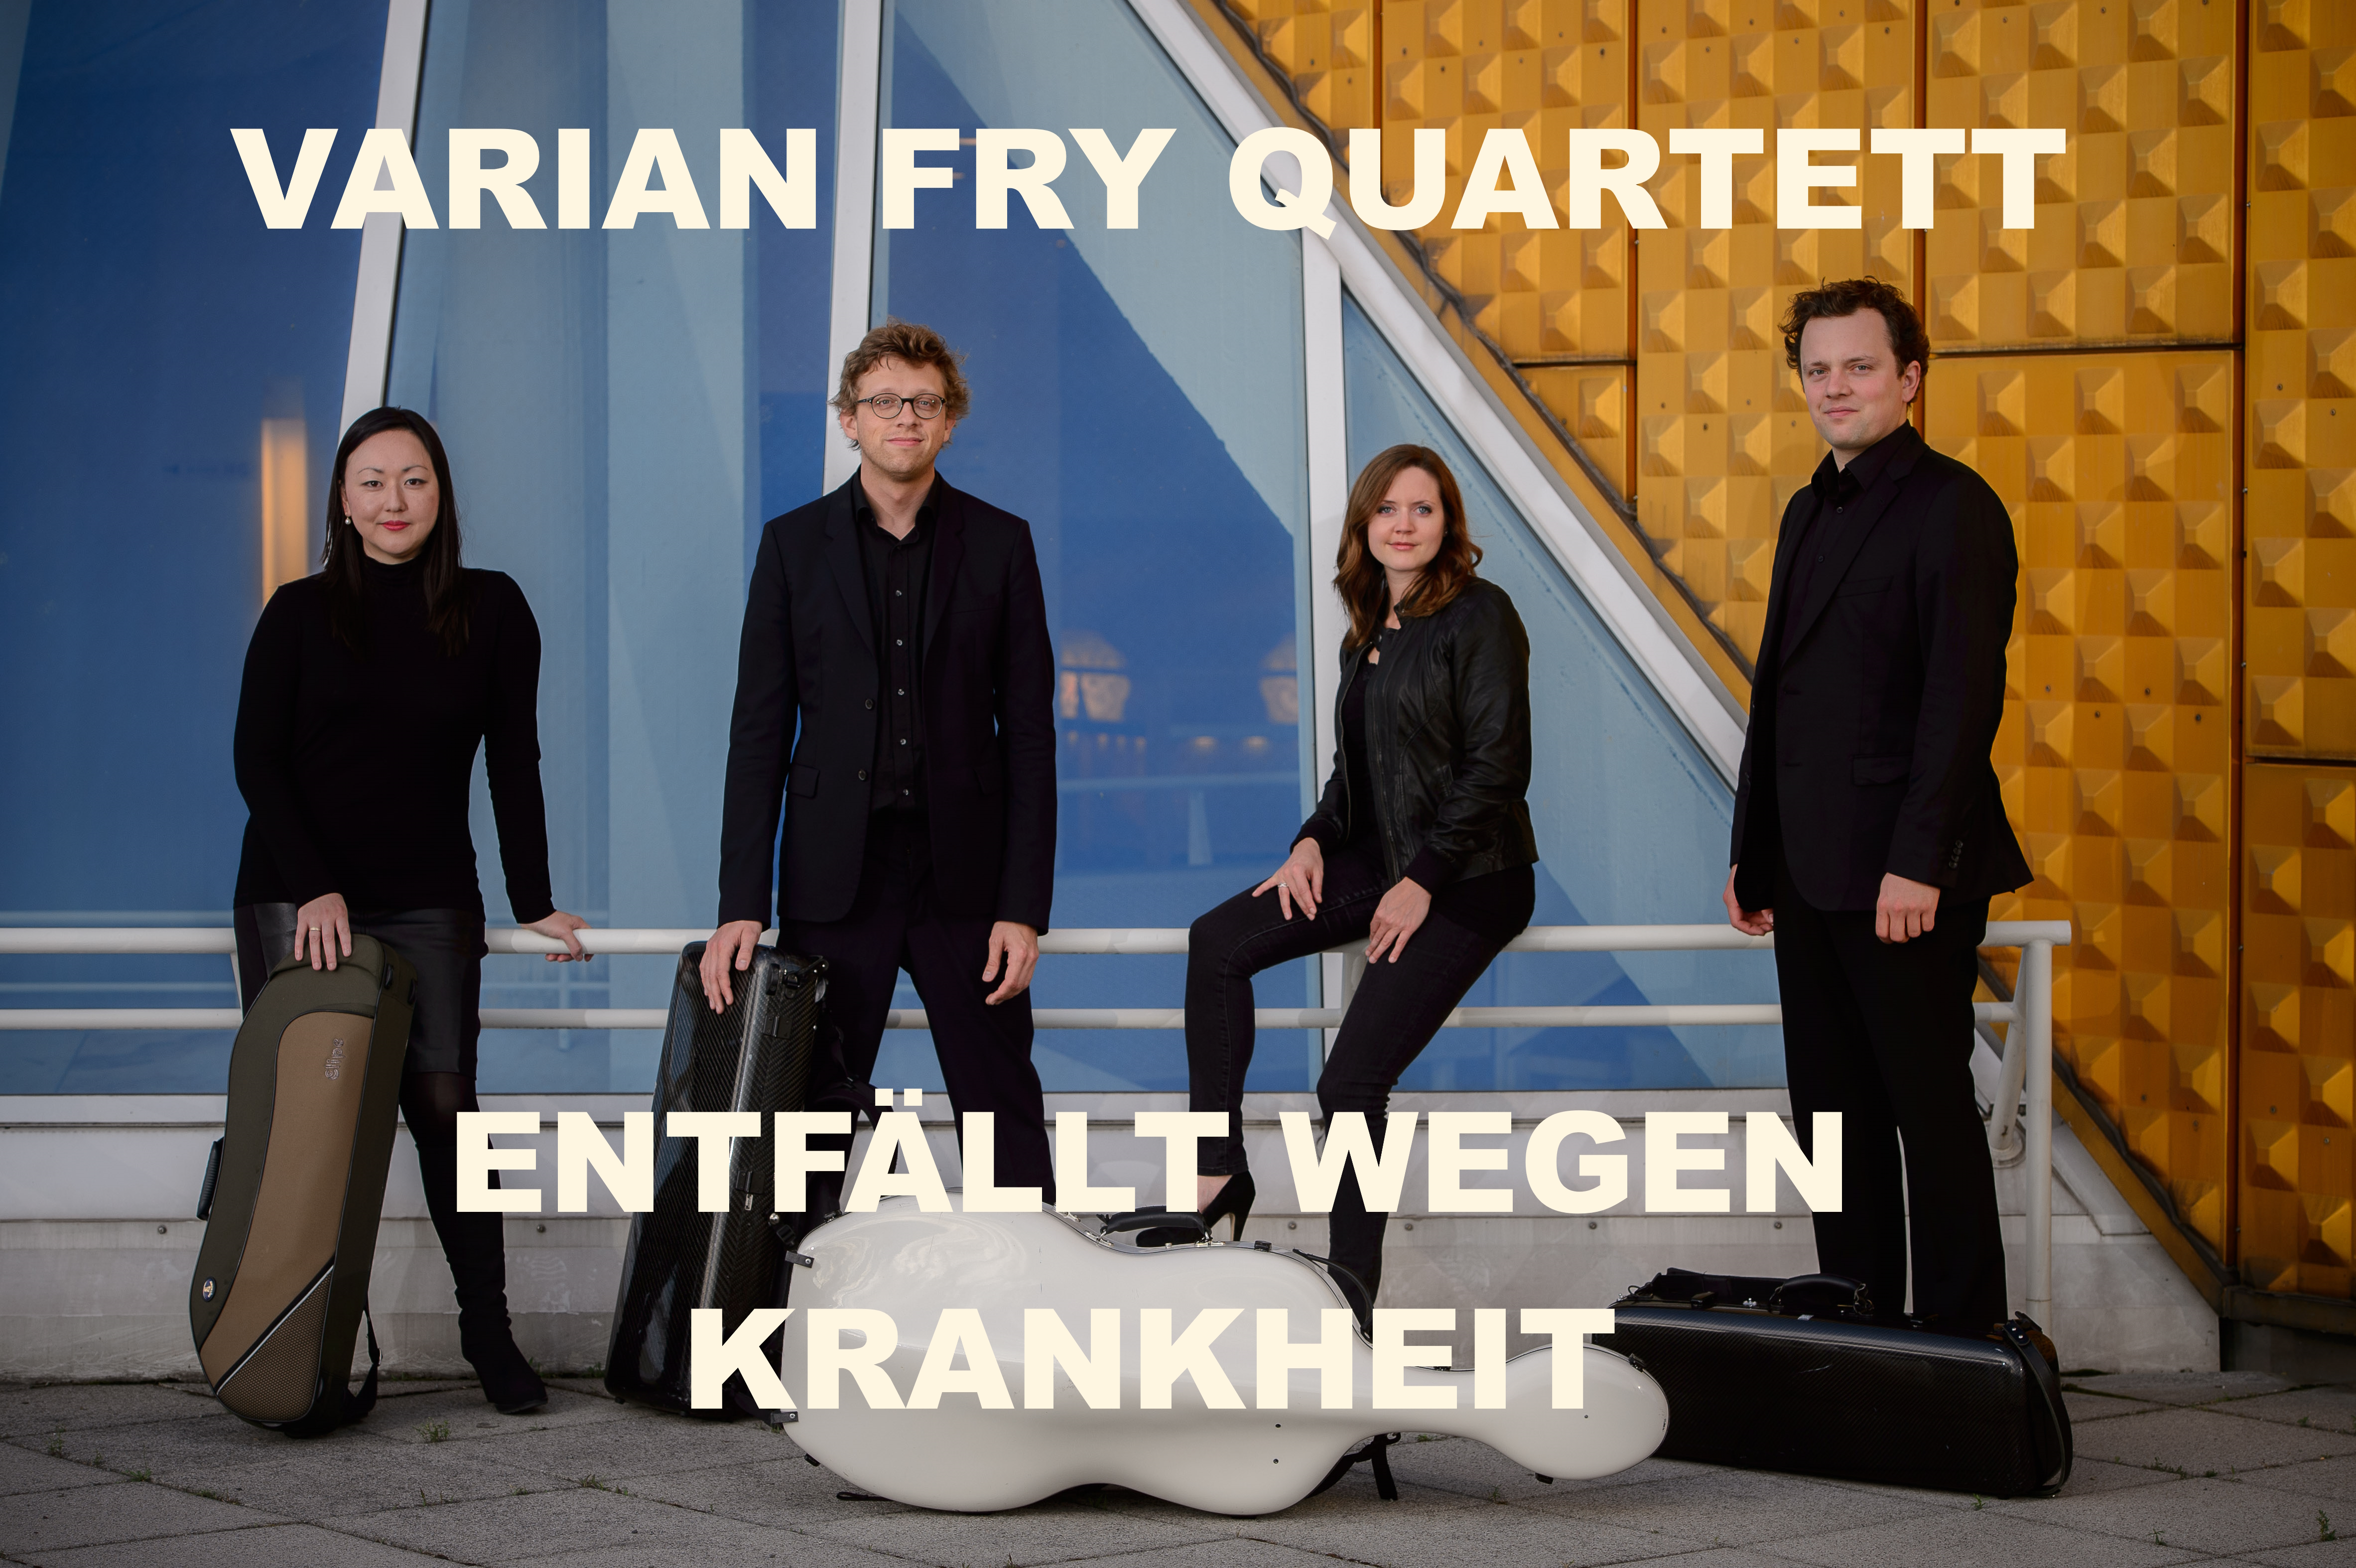 Das Foto zeigt das Varian Fry Quartett